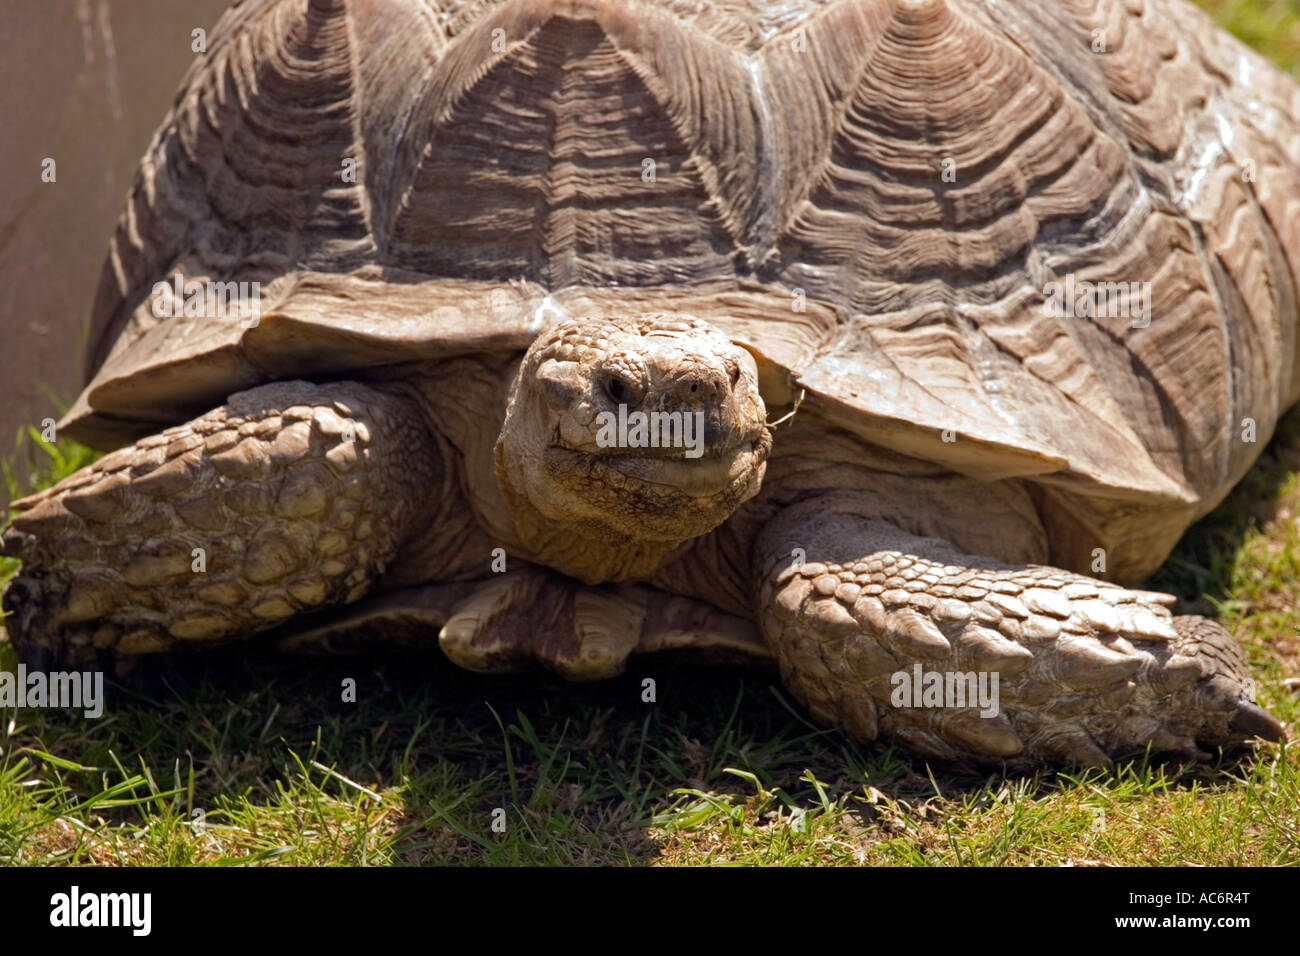 Close-up of Seychelles giant tortoise ambling on grass Stock Photo